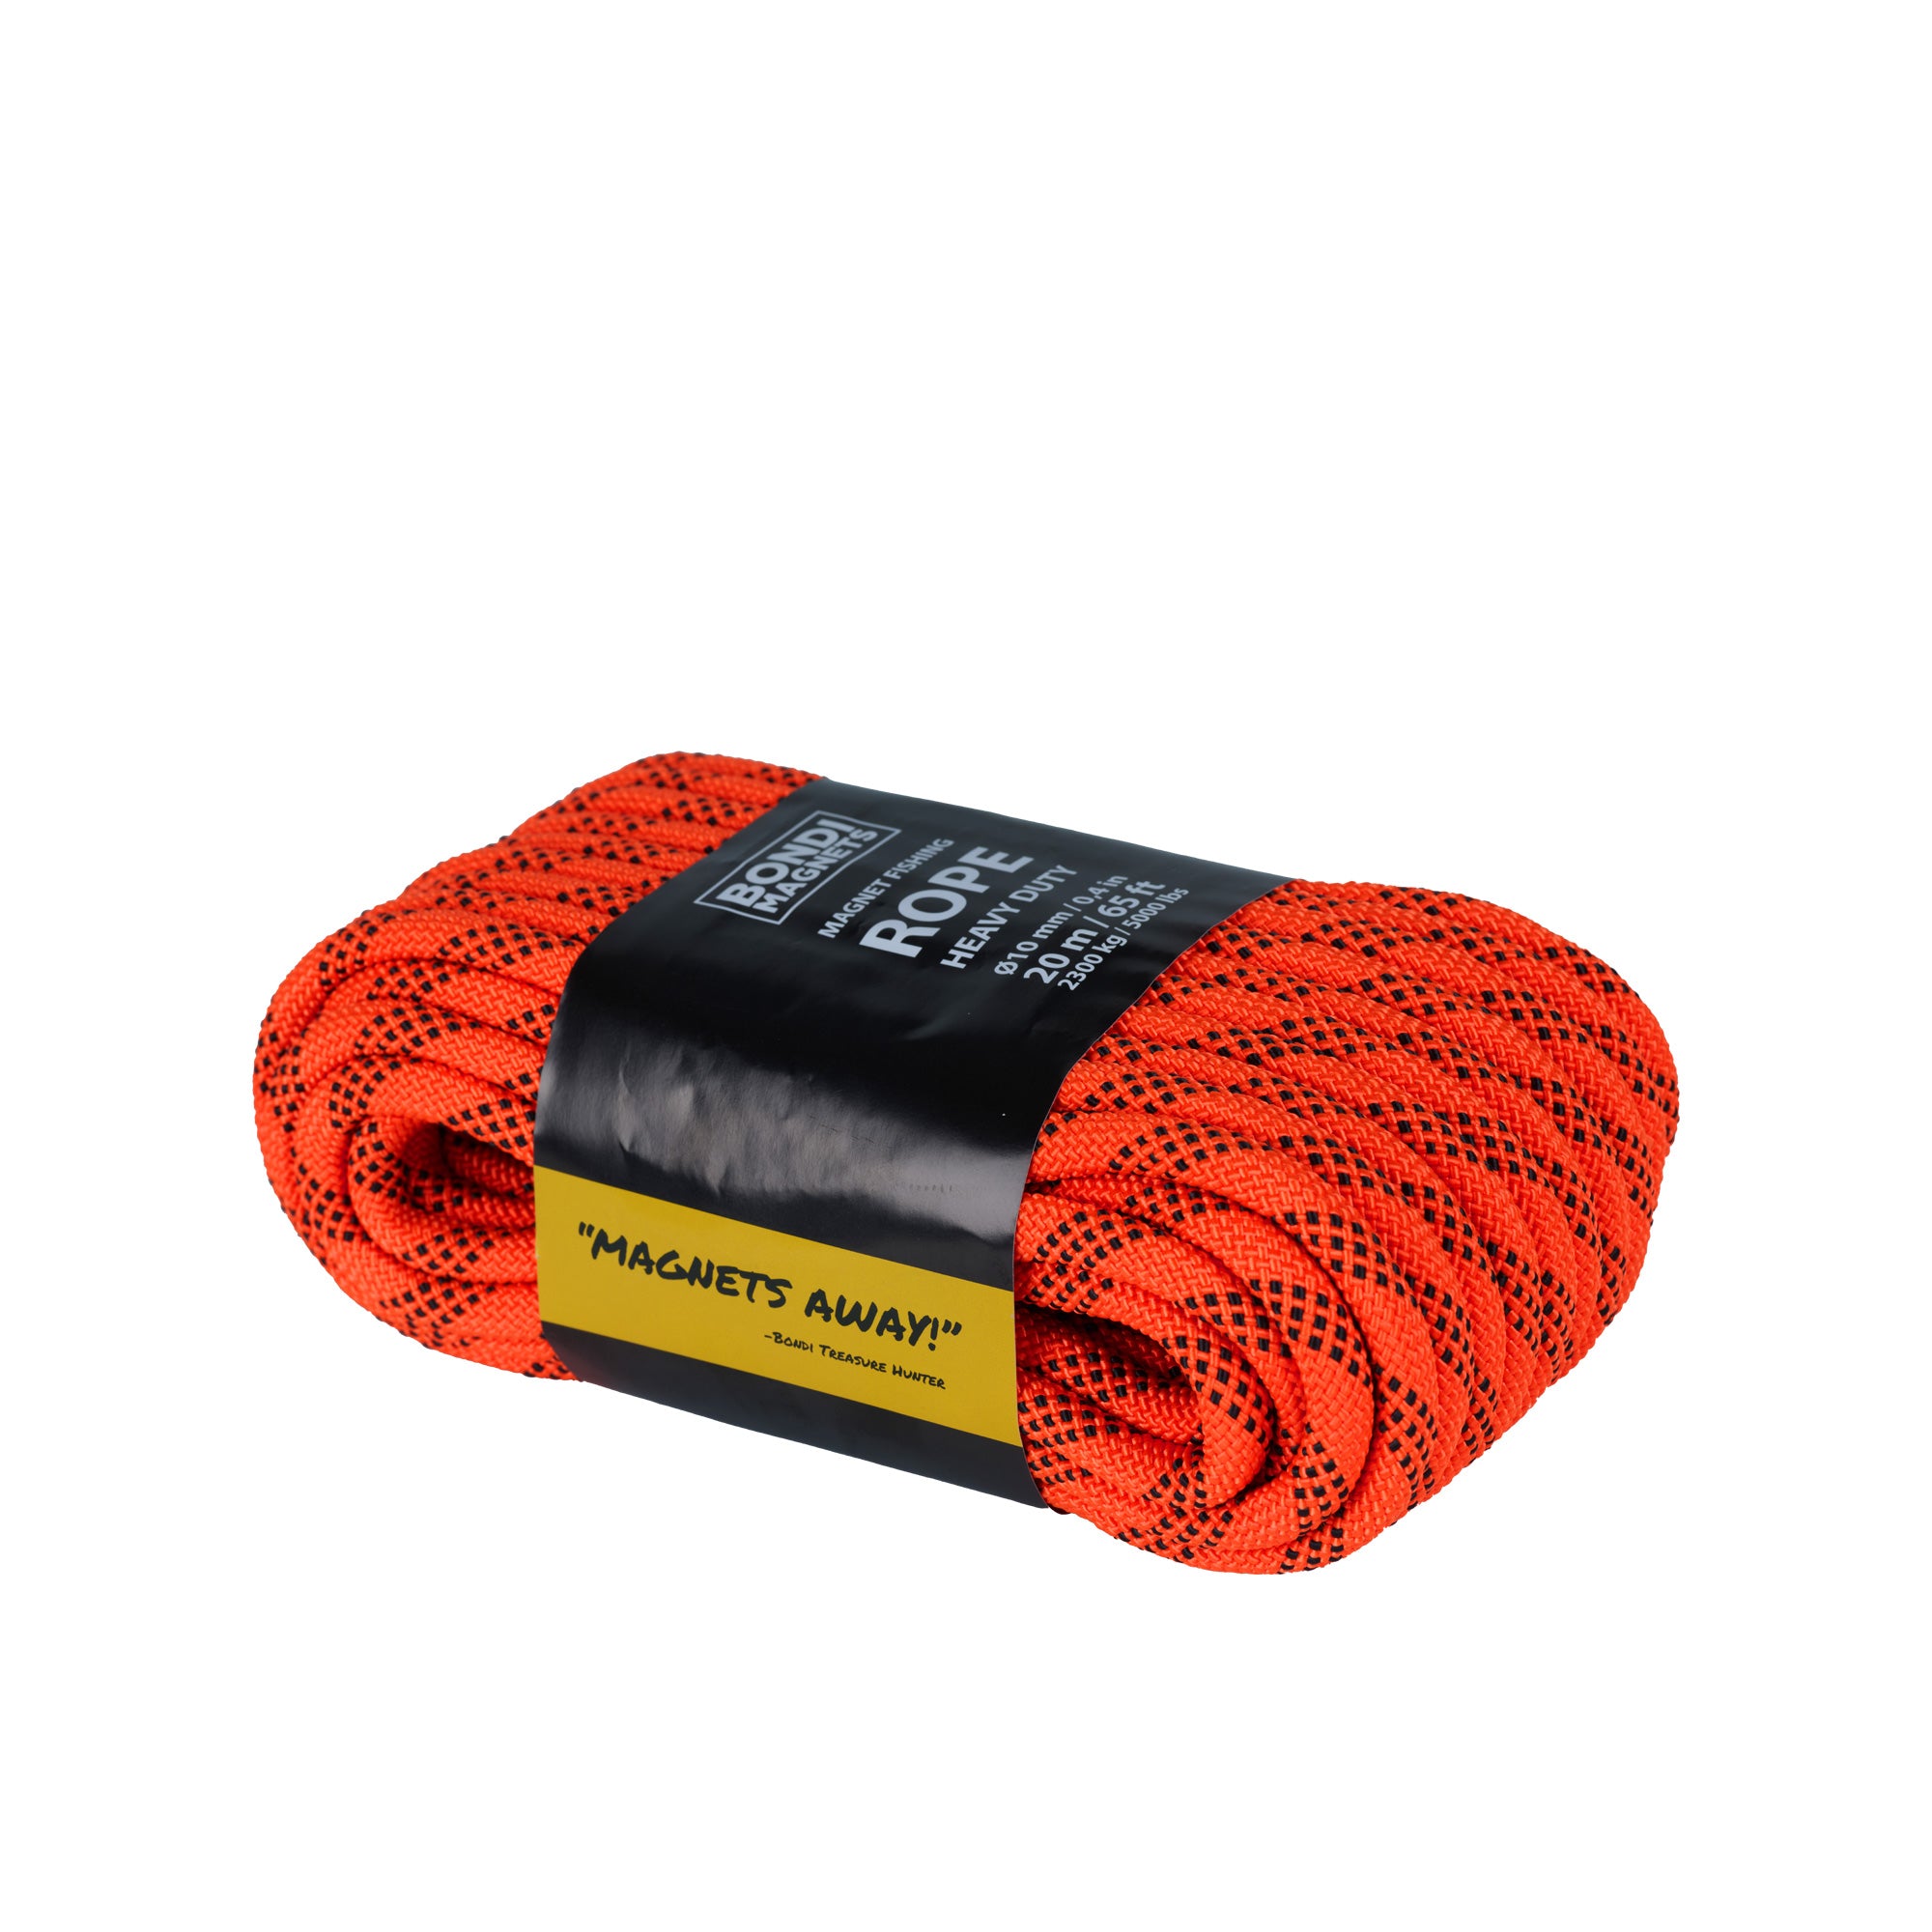 Heavy-Duty Magnet Fishing Rope - 1200 lb Strength - Versatile